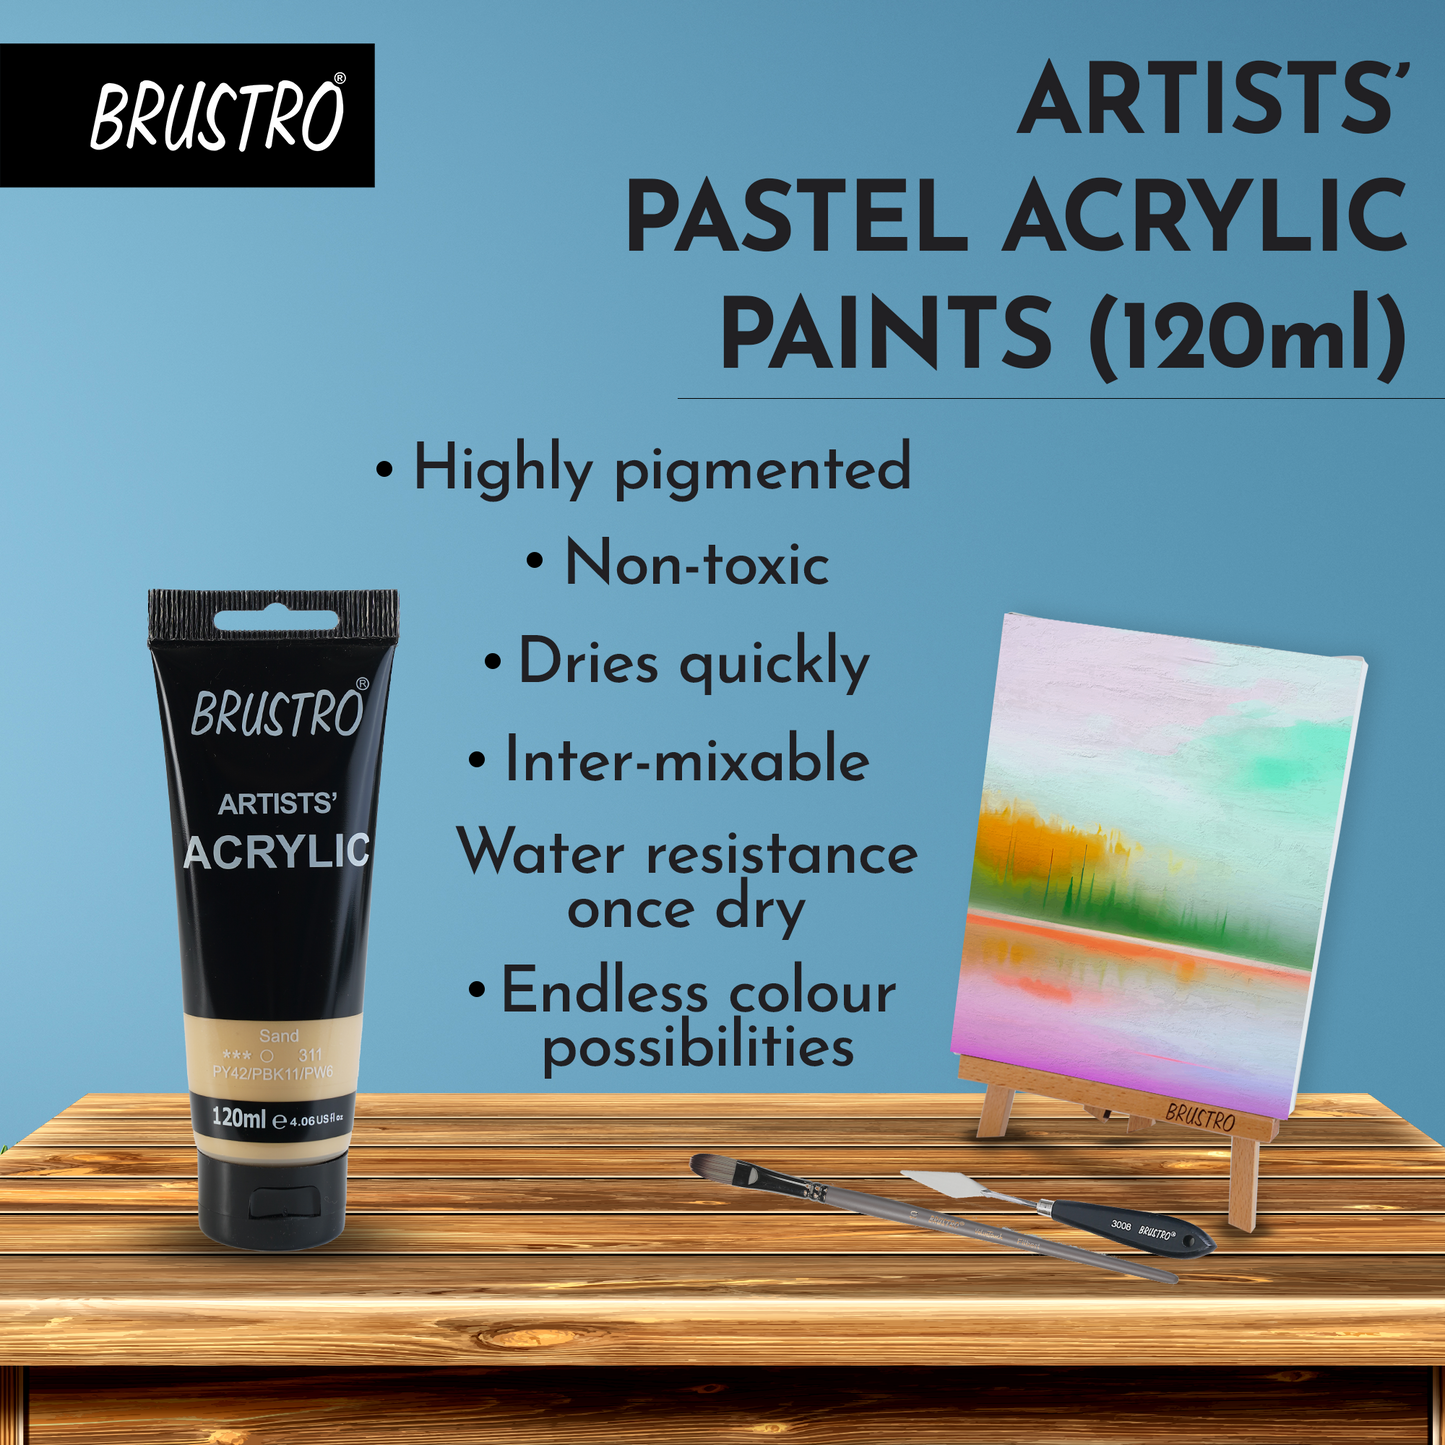 BRUSTRO Artists Acrylic 120ml Sand (Pastel Tone)